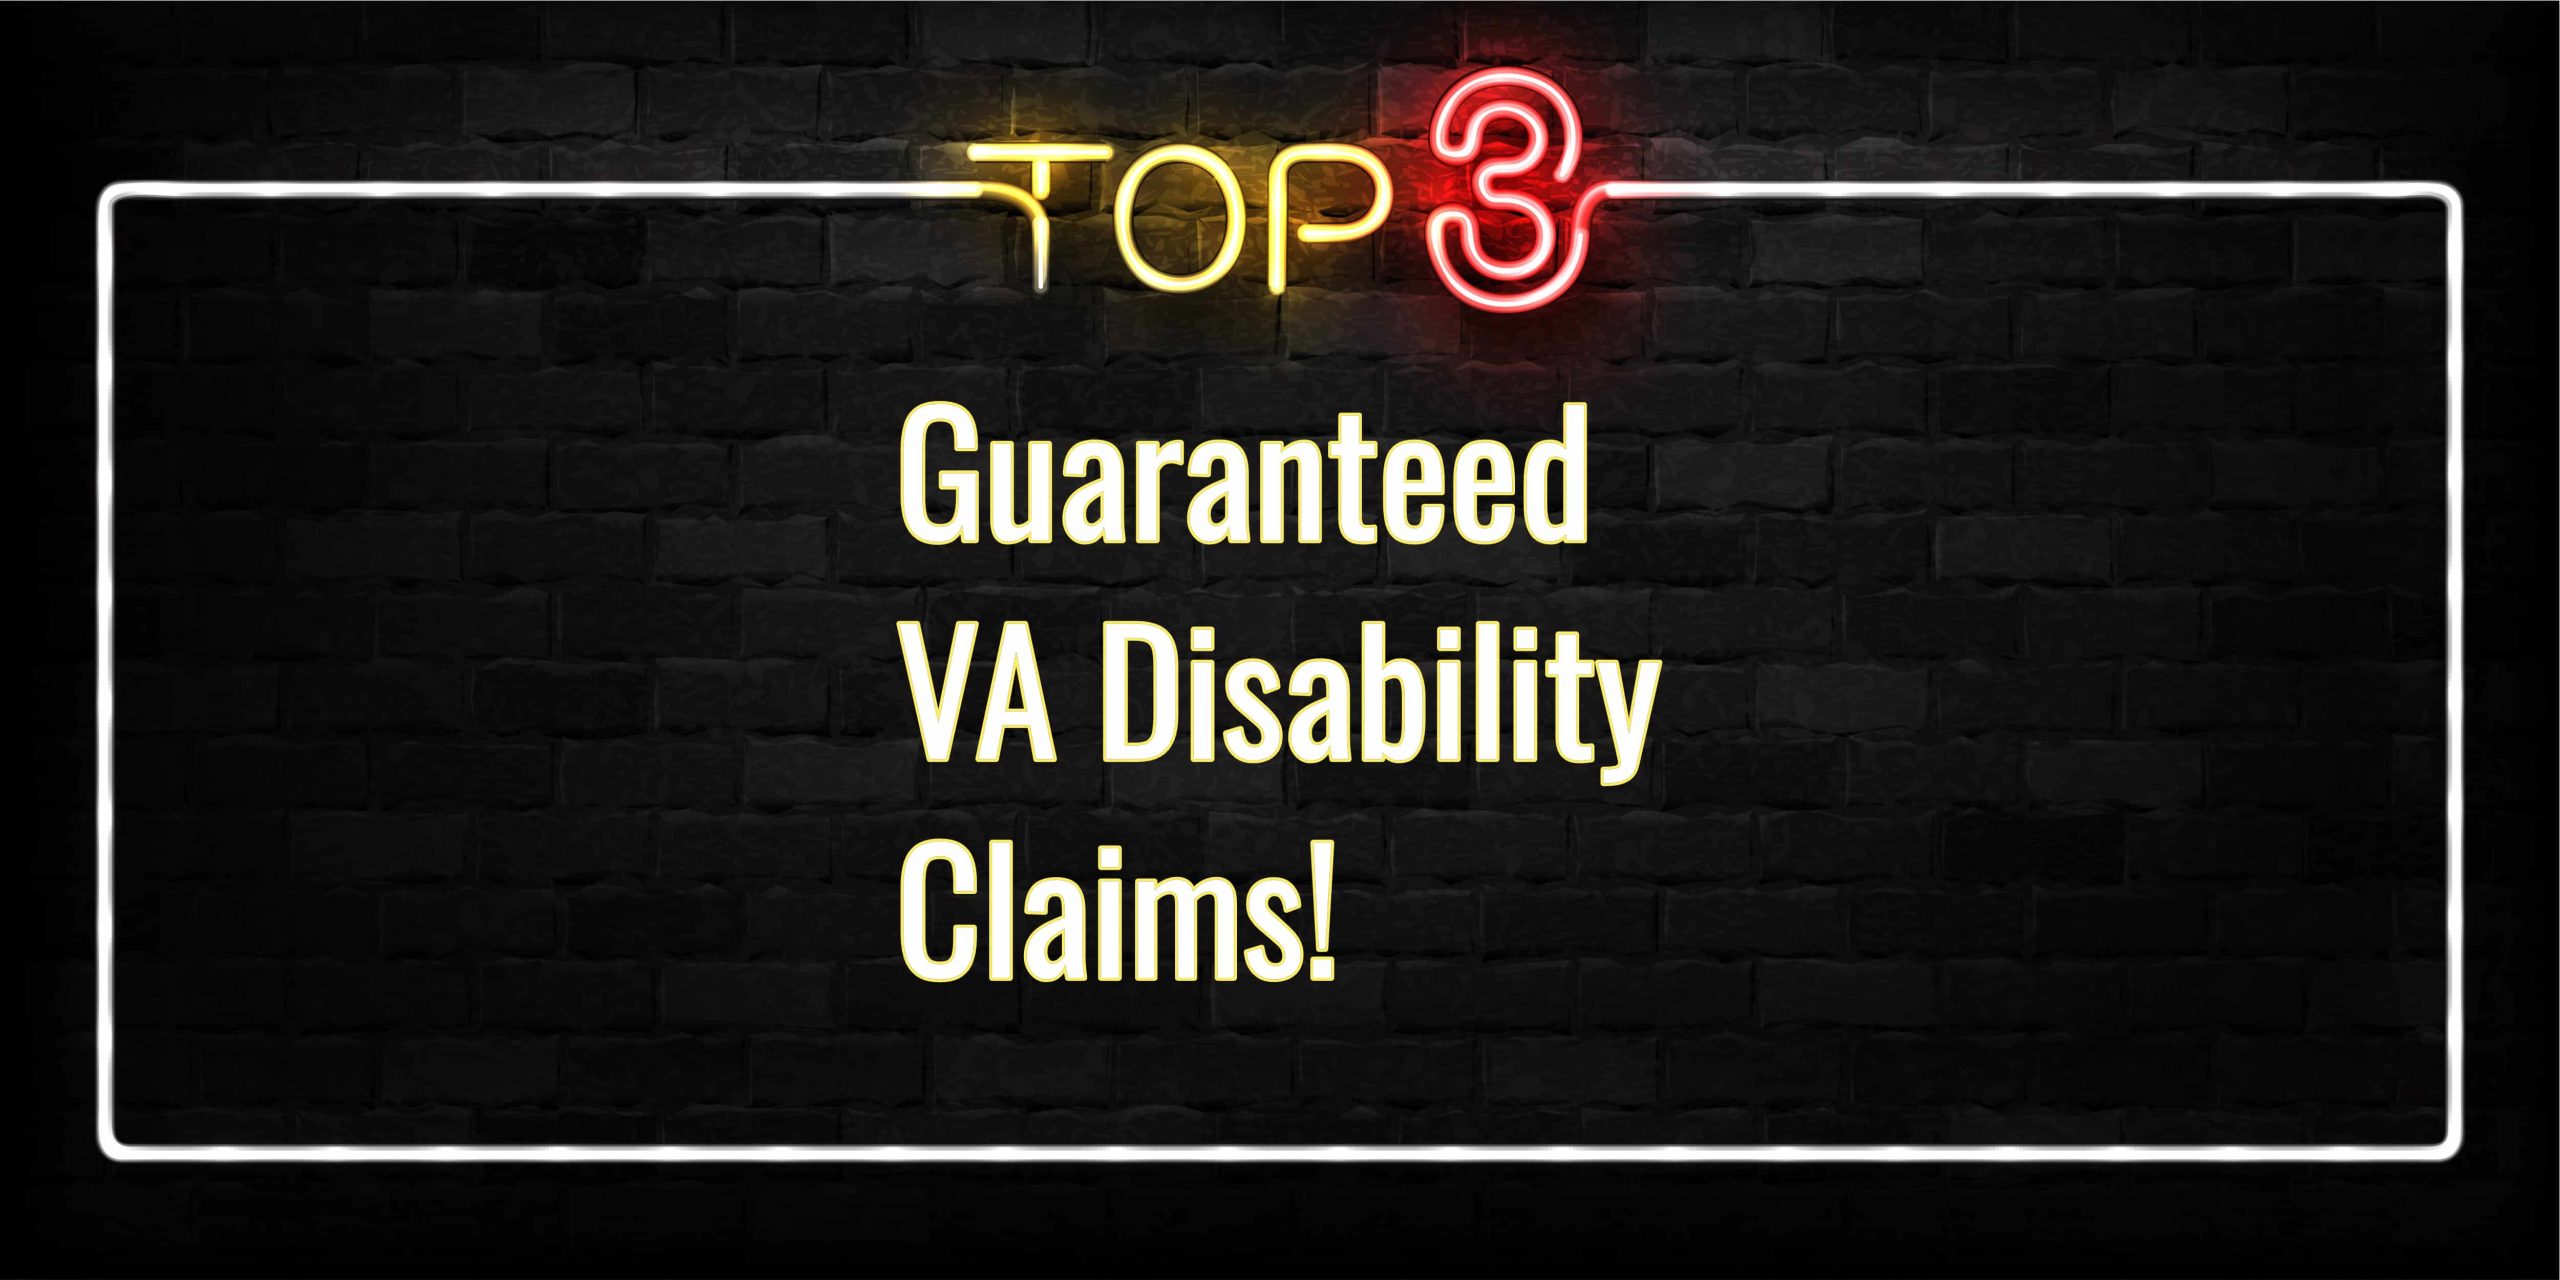 List of Top 3 Guaranteed VA Disability Claims